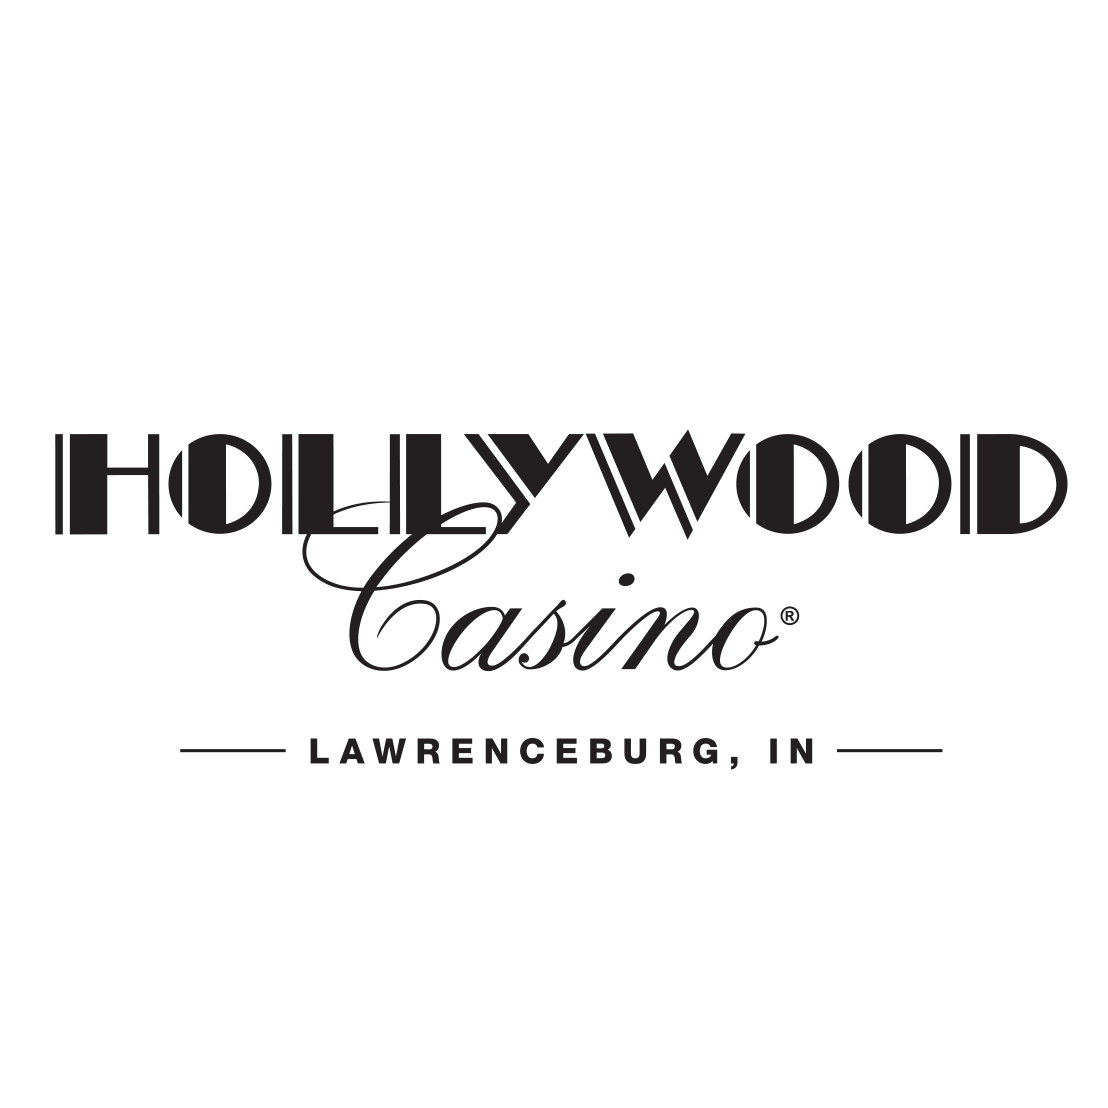 hollywood casino lawrenceburg indiana discount codes